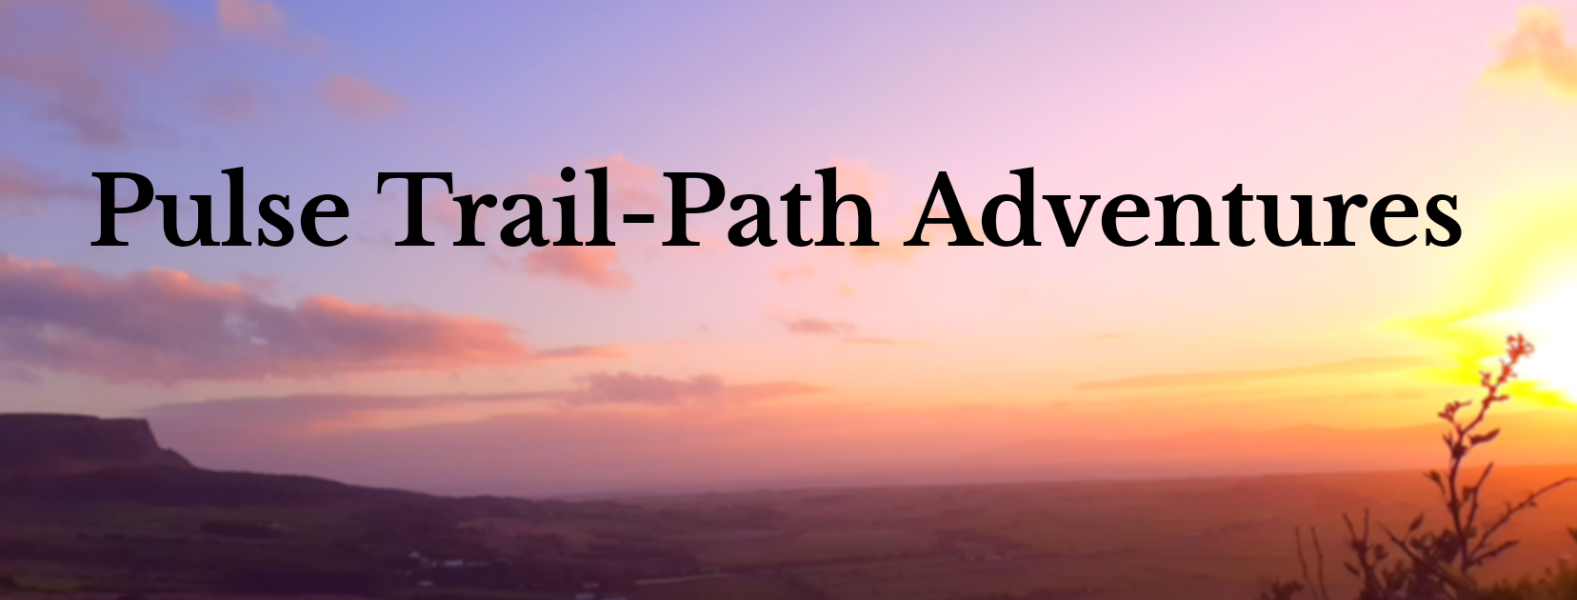 Pulse Trail-Path Adventures 2021 carousel image 1